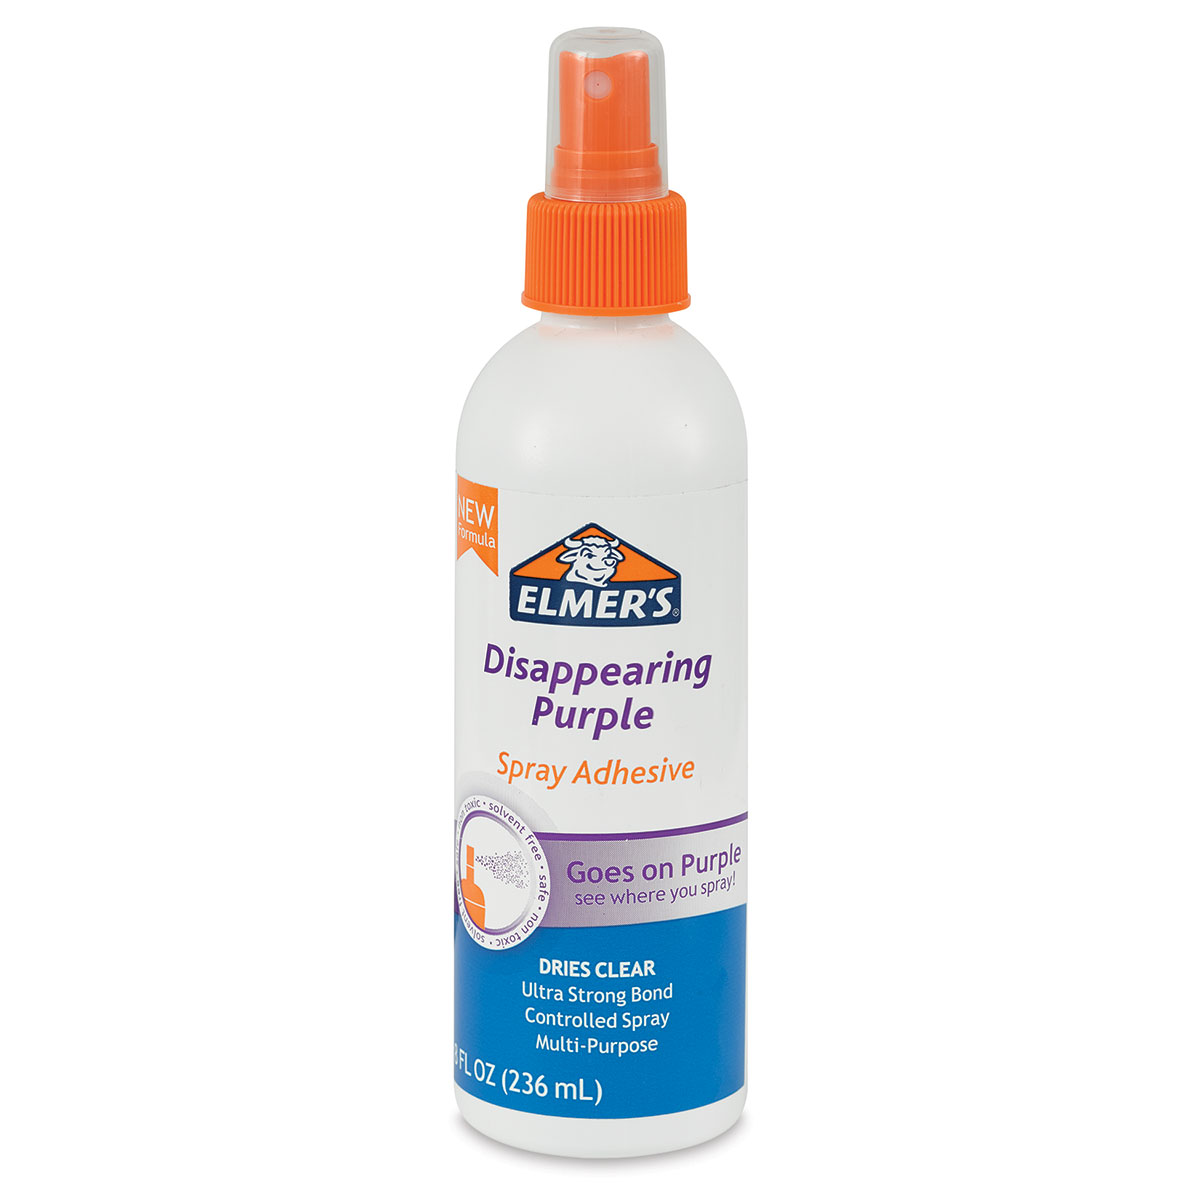 Elmer's Disappearing Purple Spray Adhesive on Vimeo